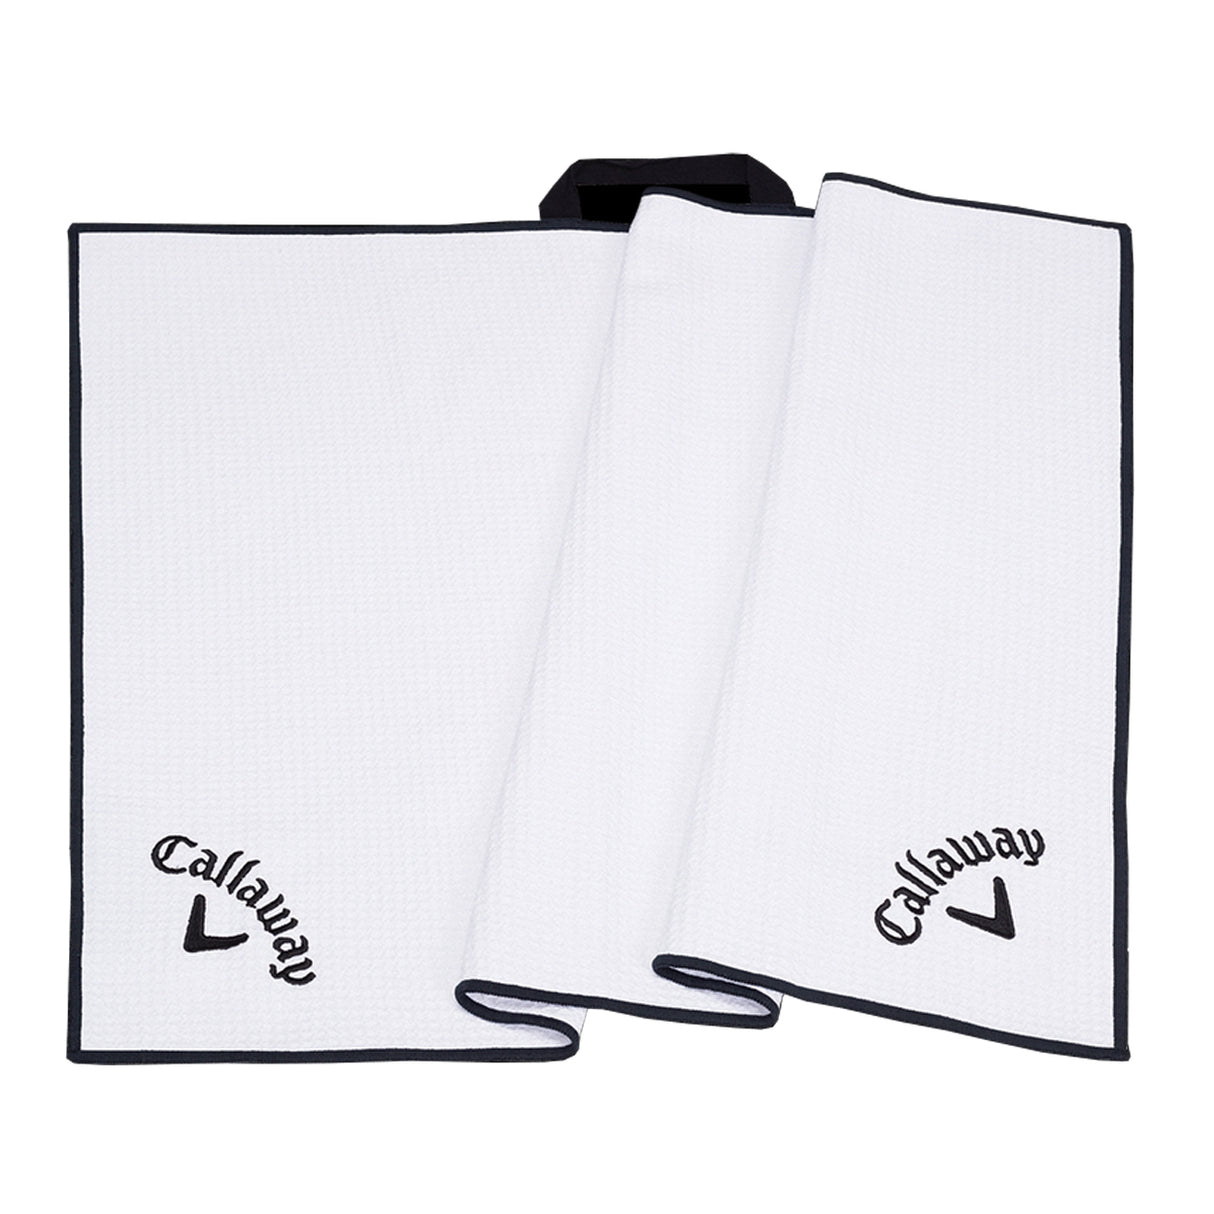 Callaway 30 x 20 inch Players Microfiber Golf Bag Towel